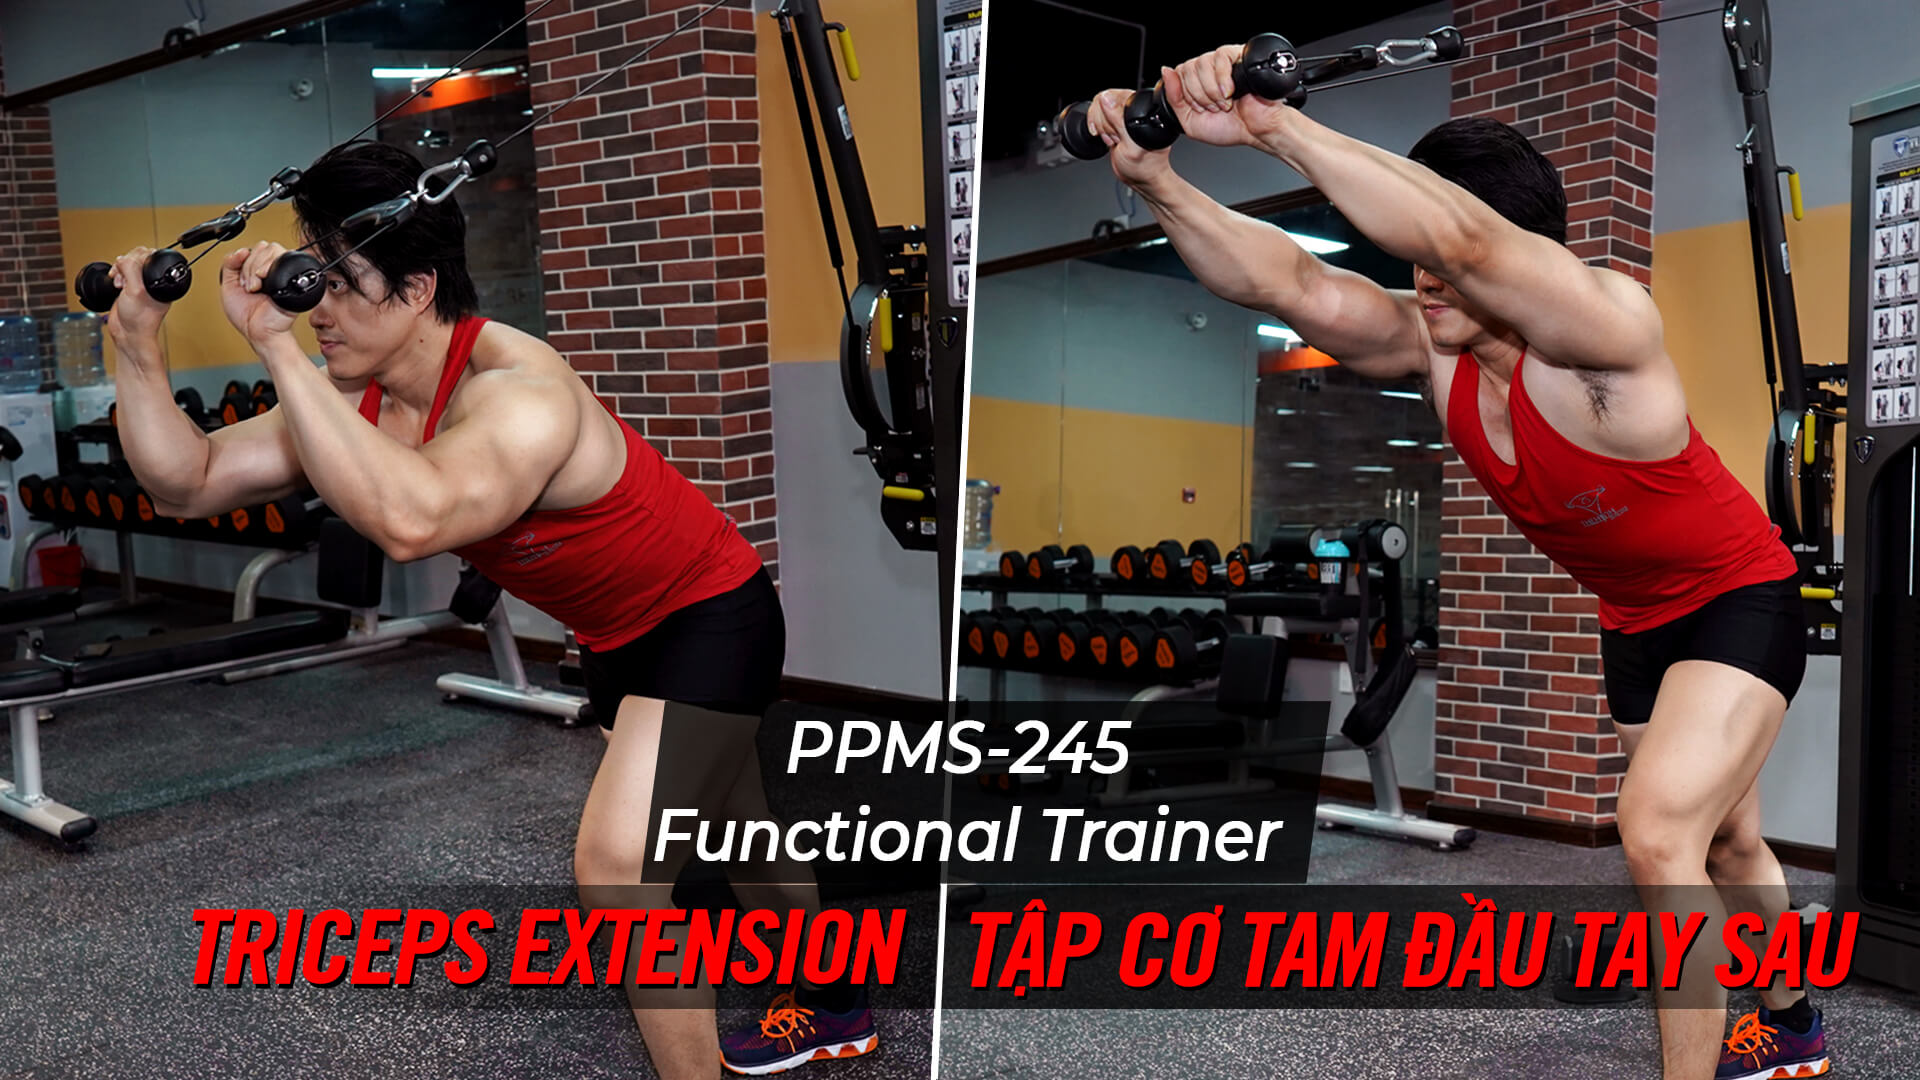 Triceps Extension - Cách tập tay sau với Functional Trainer (PPMS-245) 